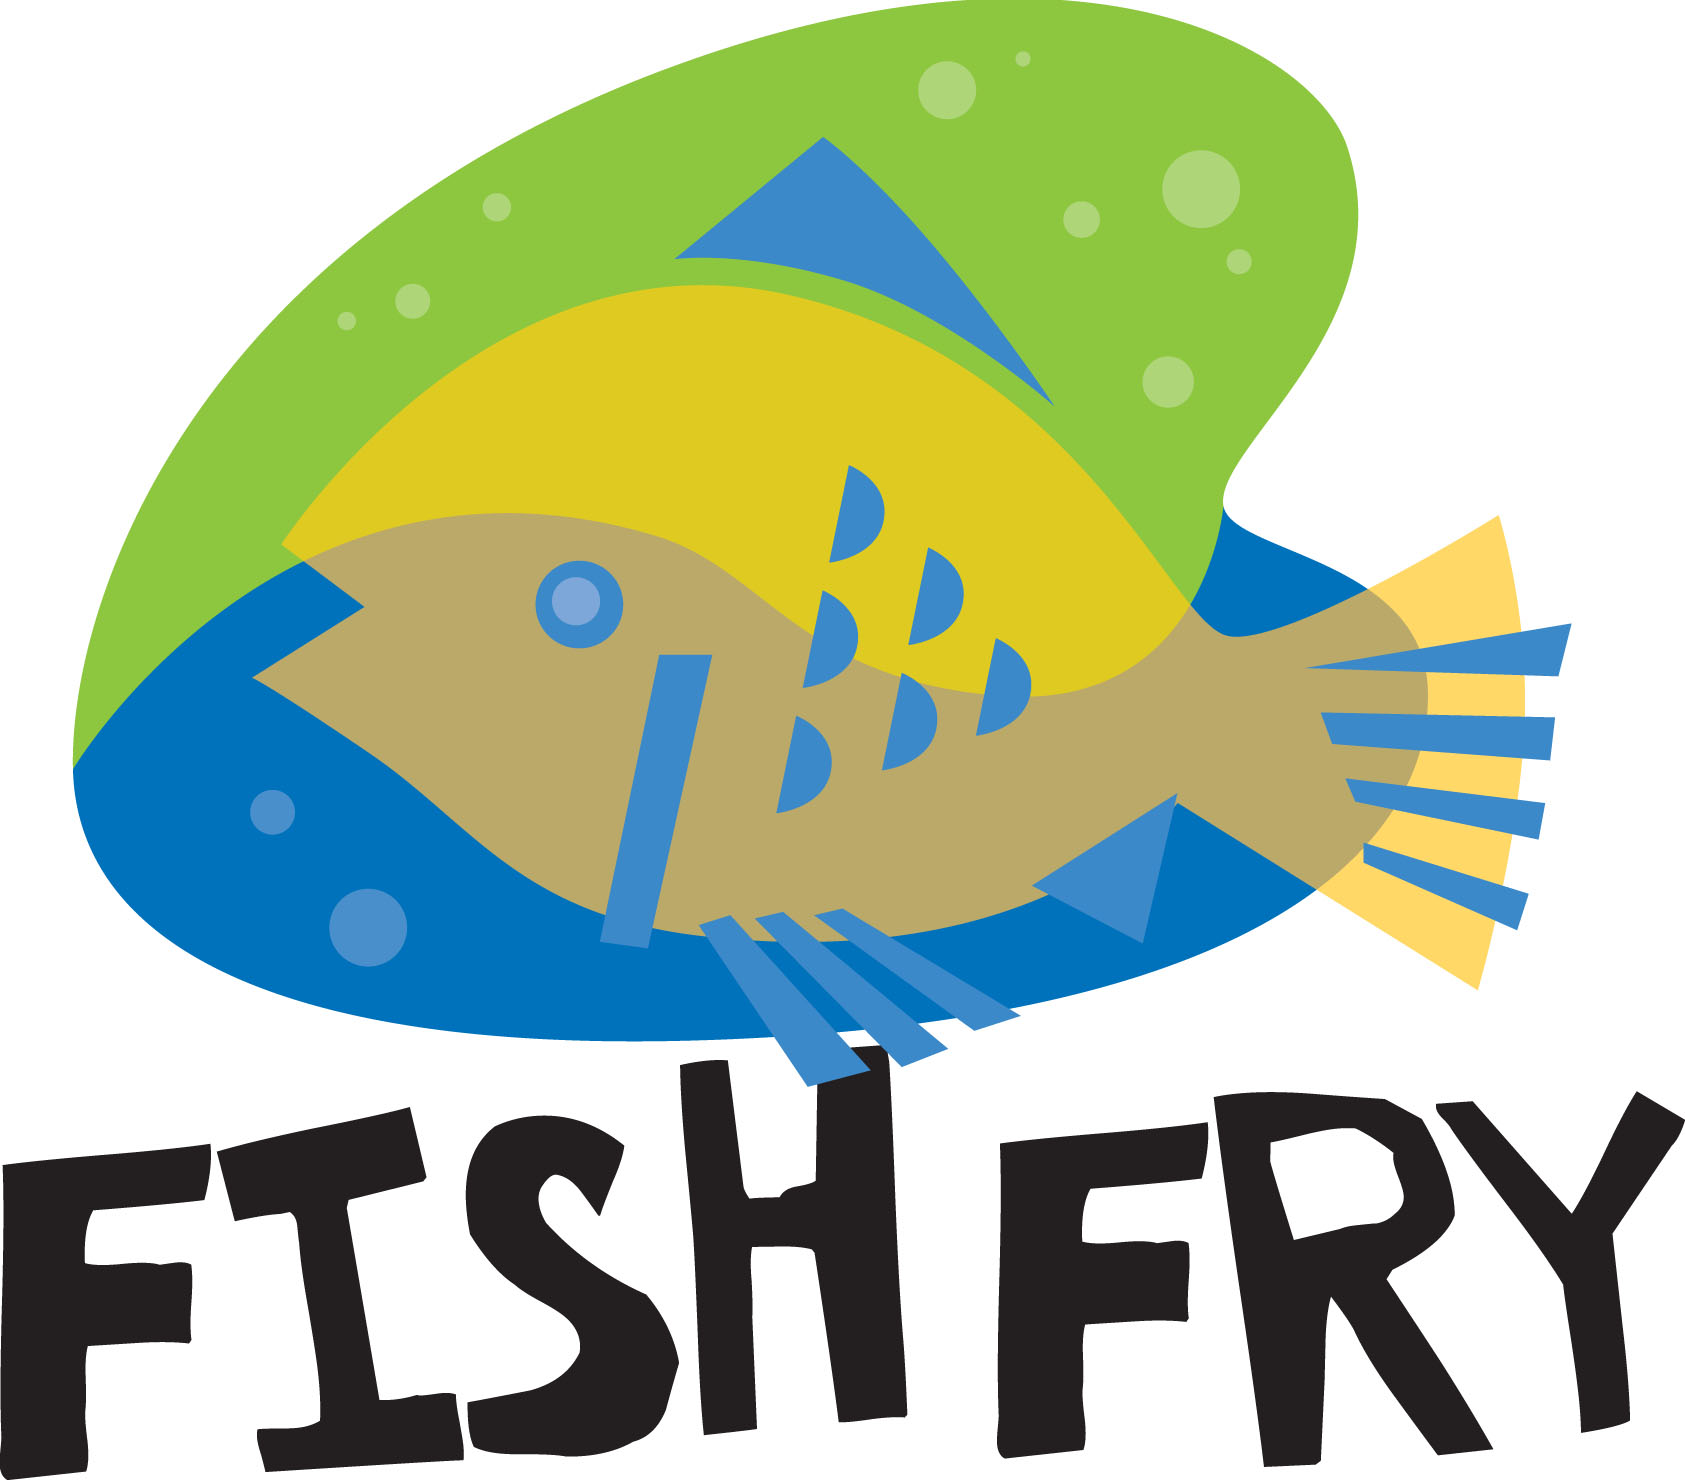 Fish fry dinner clipart 2